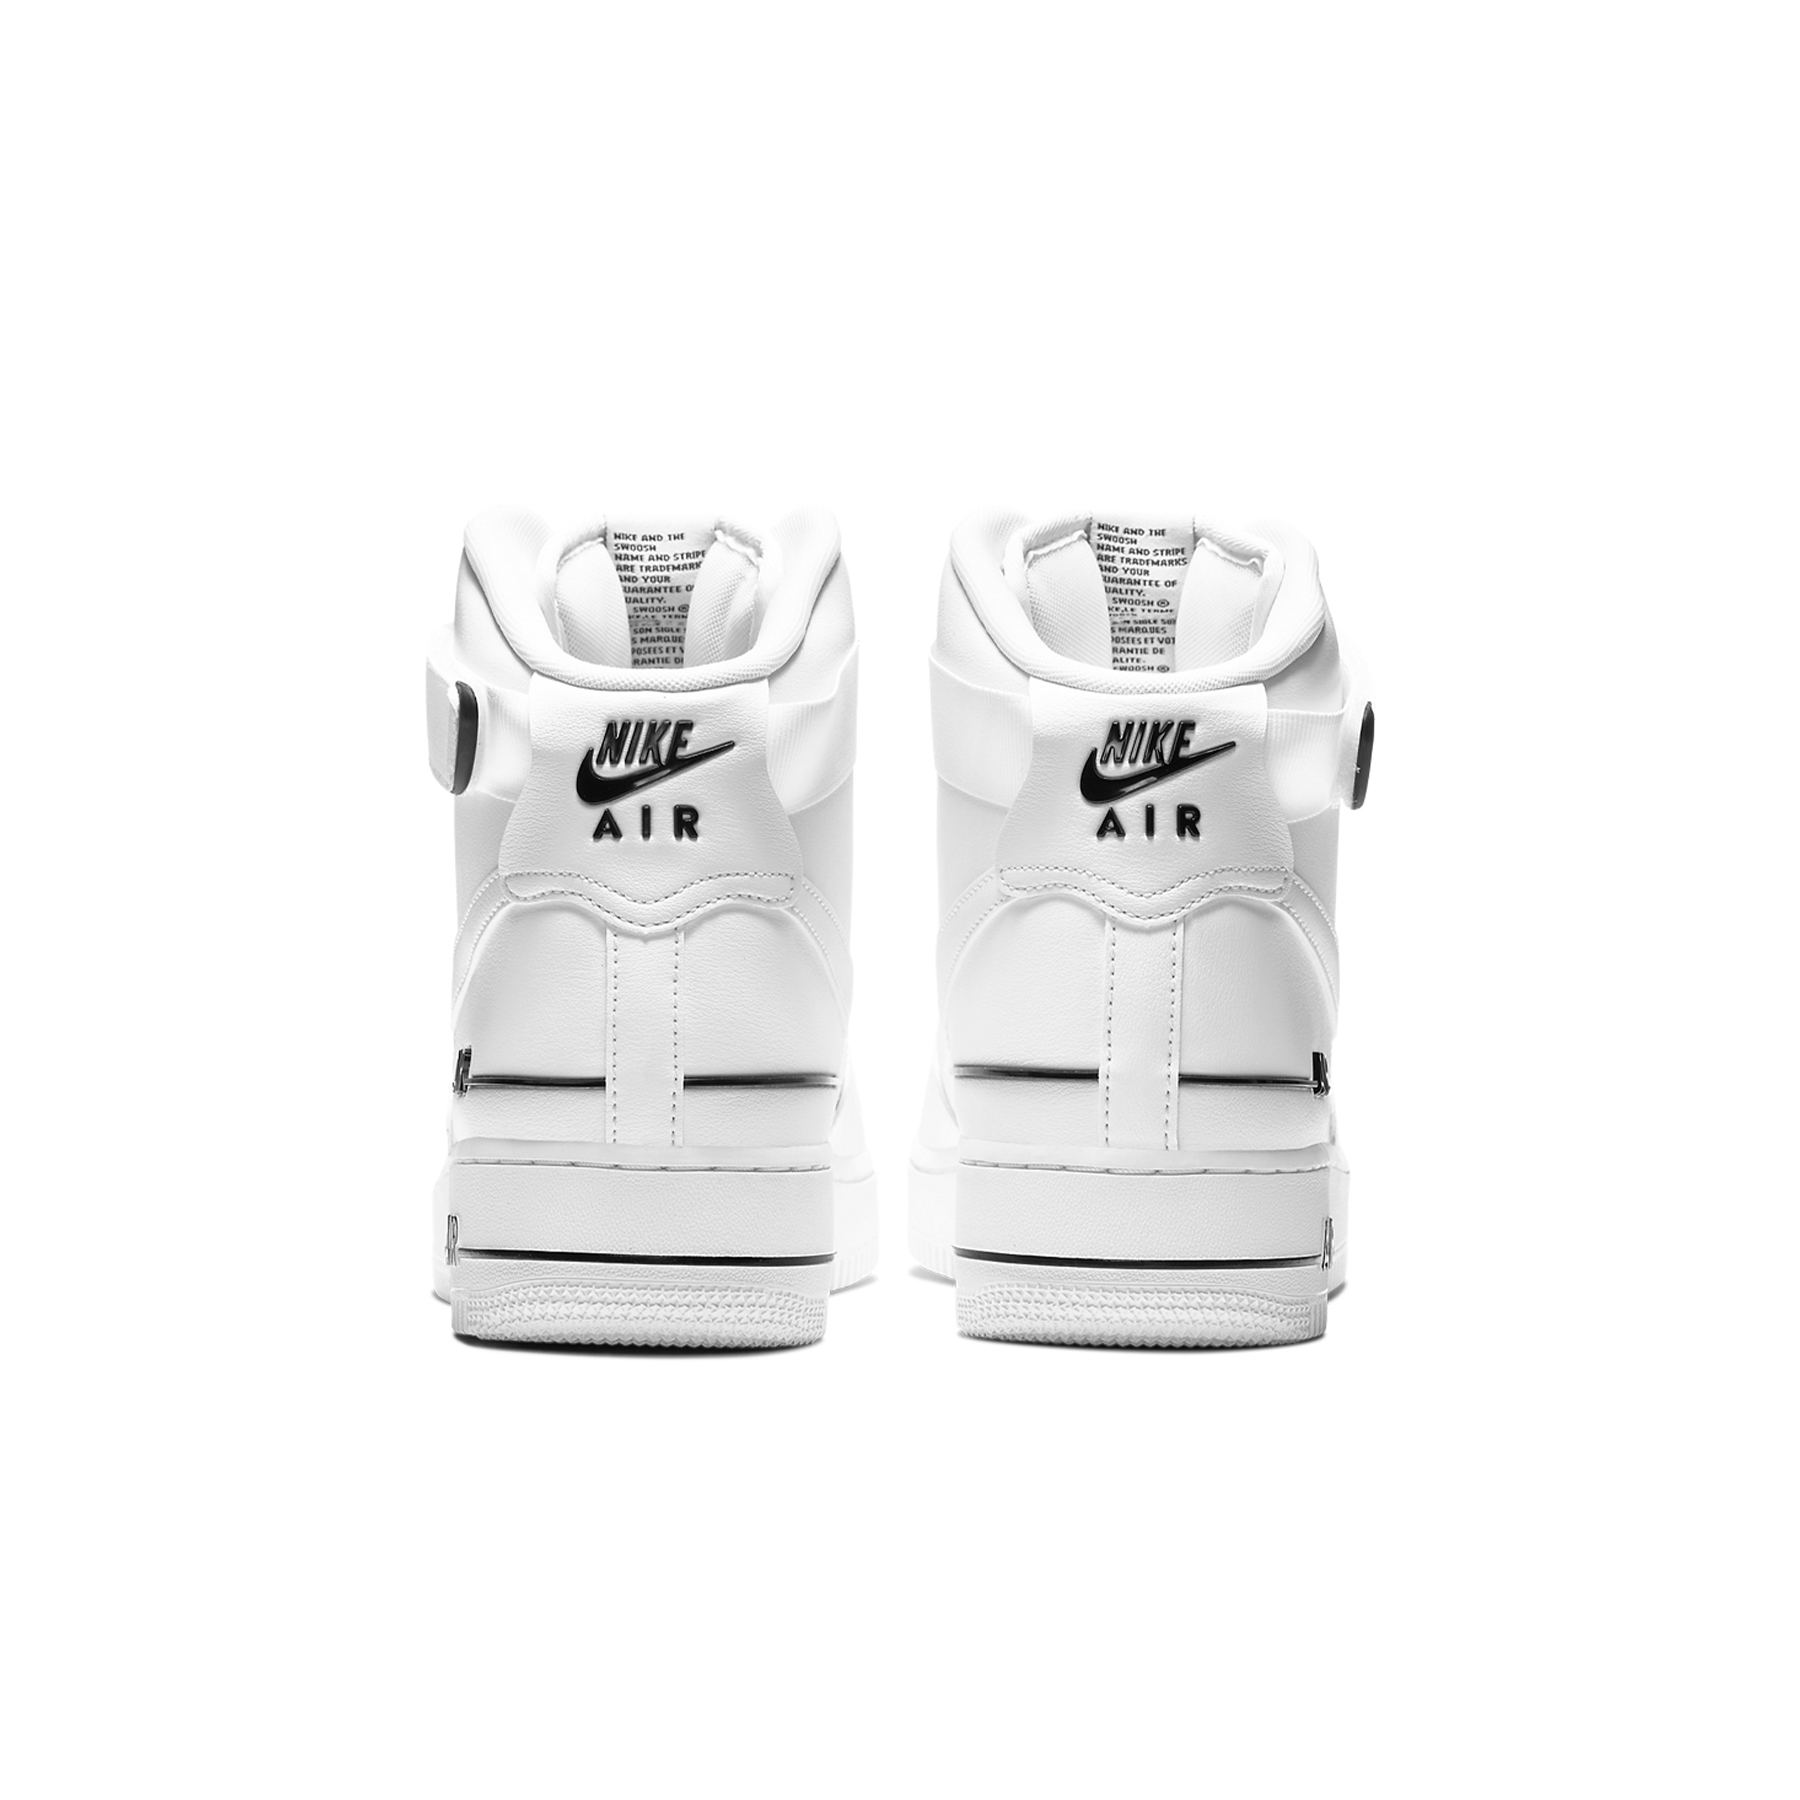 Nike Air Force 1 High '07 LV8 3 Release 2020, Drops